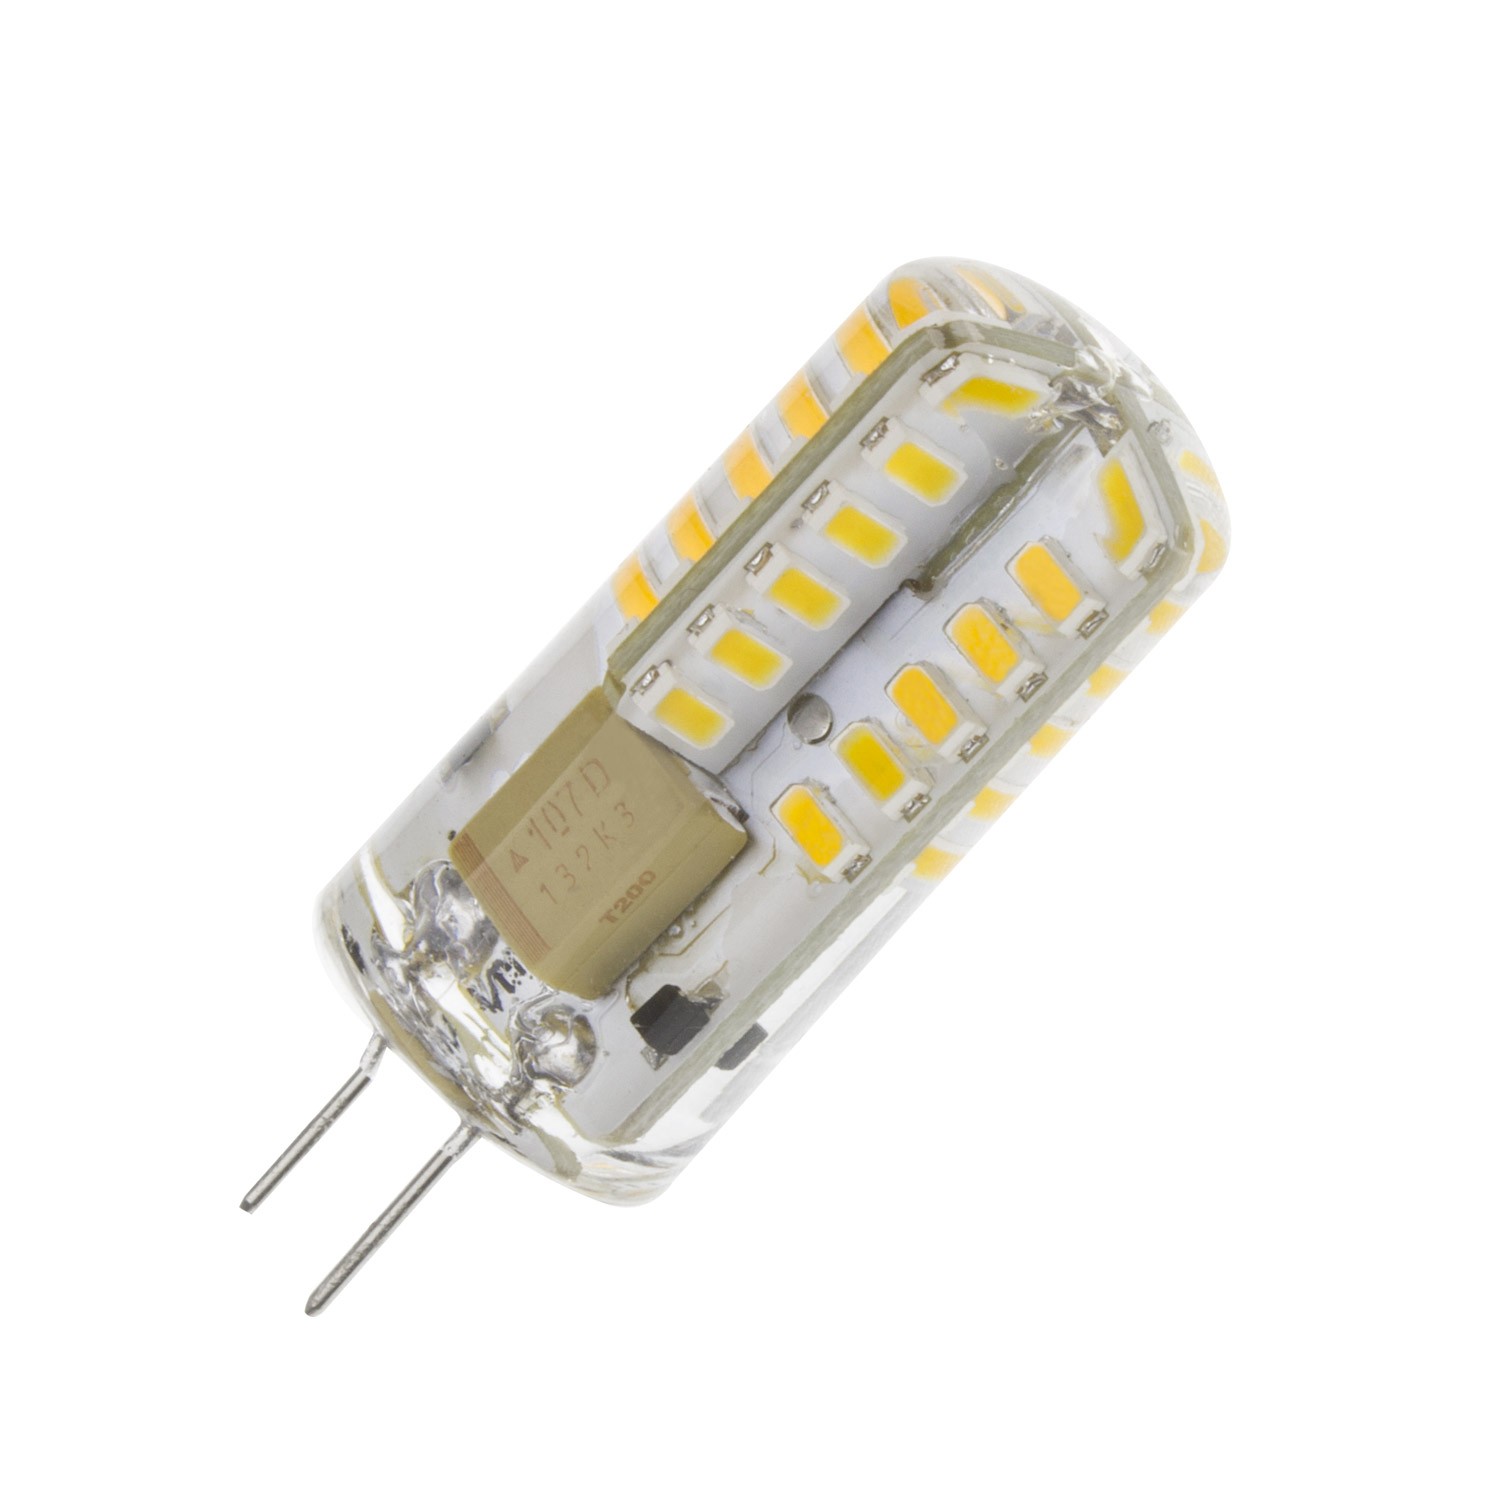 Manier verkoudheid Impasse LED Lamp G4 2W 270 lm 12V - Ledkia